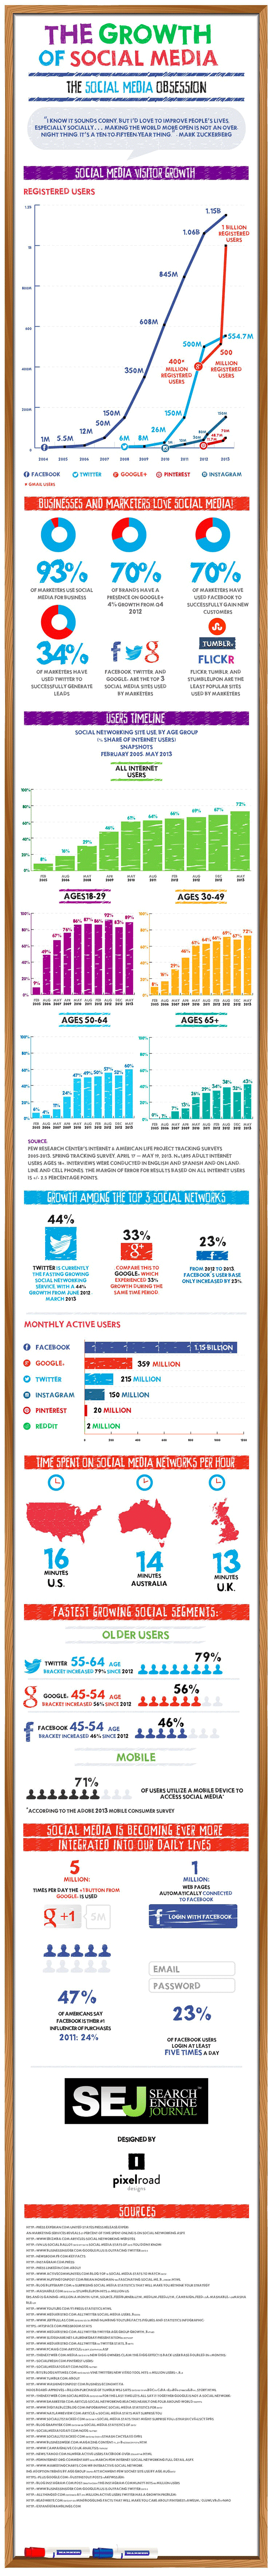 Social Media Facts and statistics